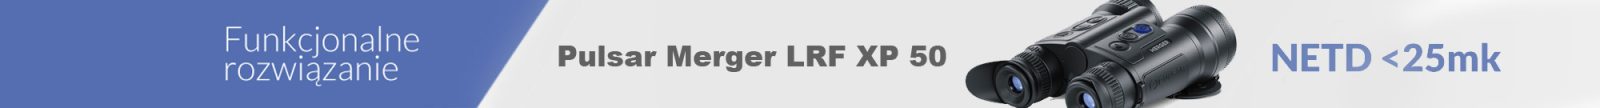 Pulsar Merger LRF XP50 baner